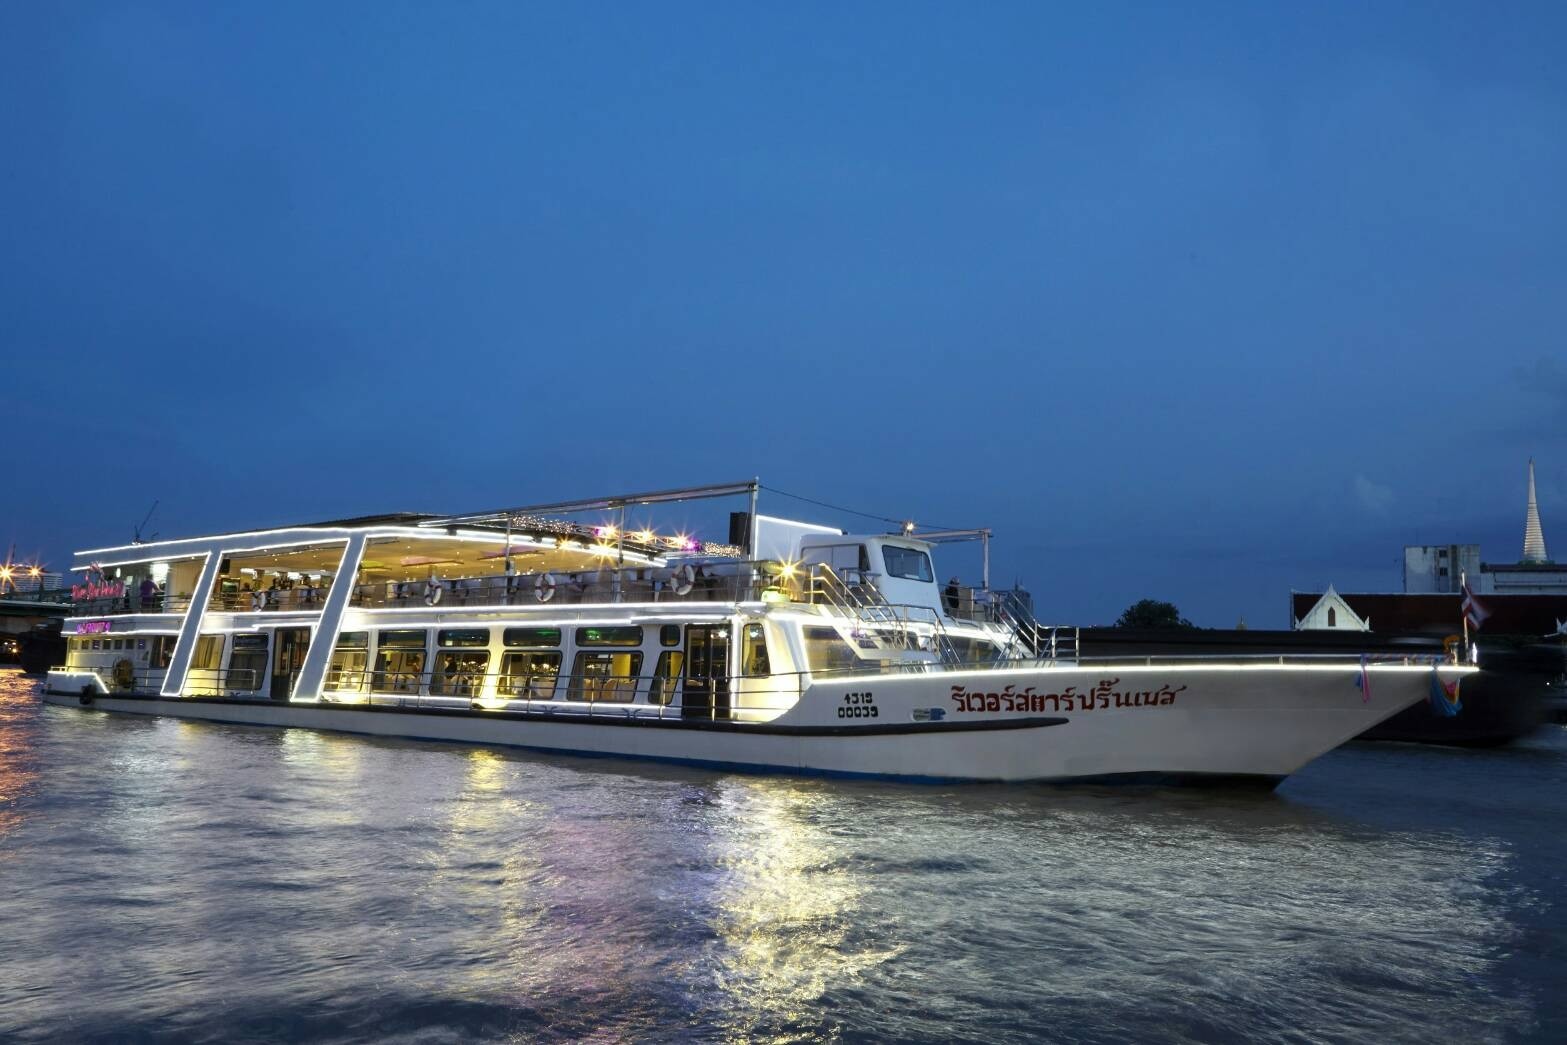 River Star Princess Cruise